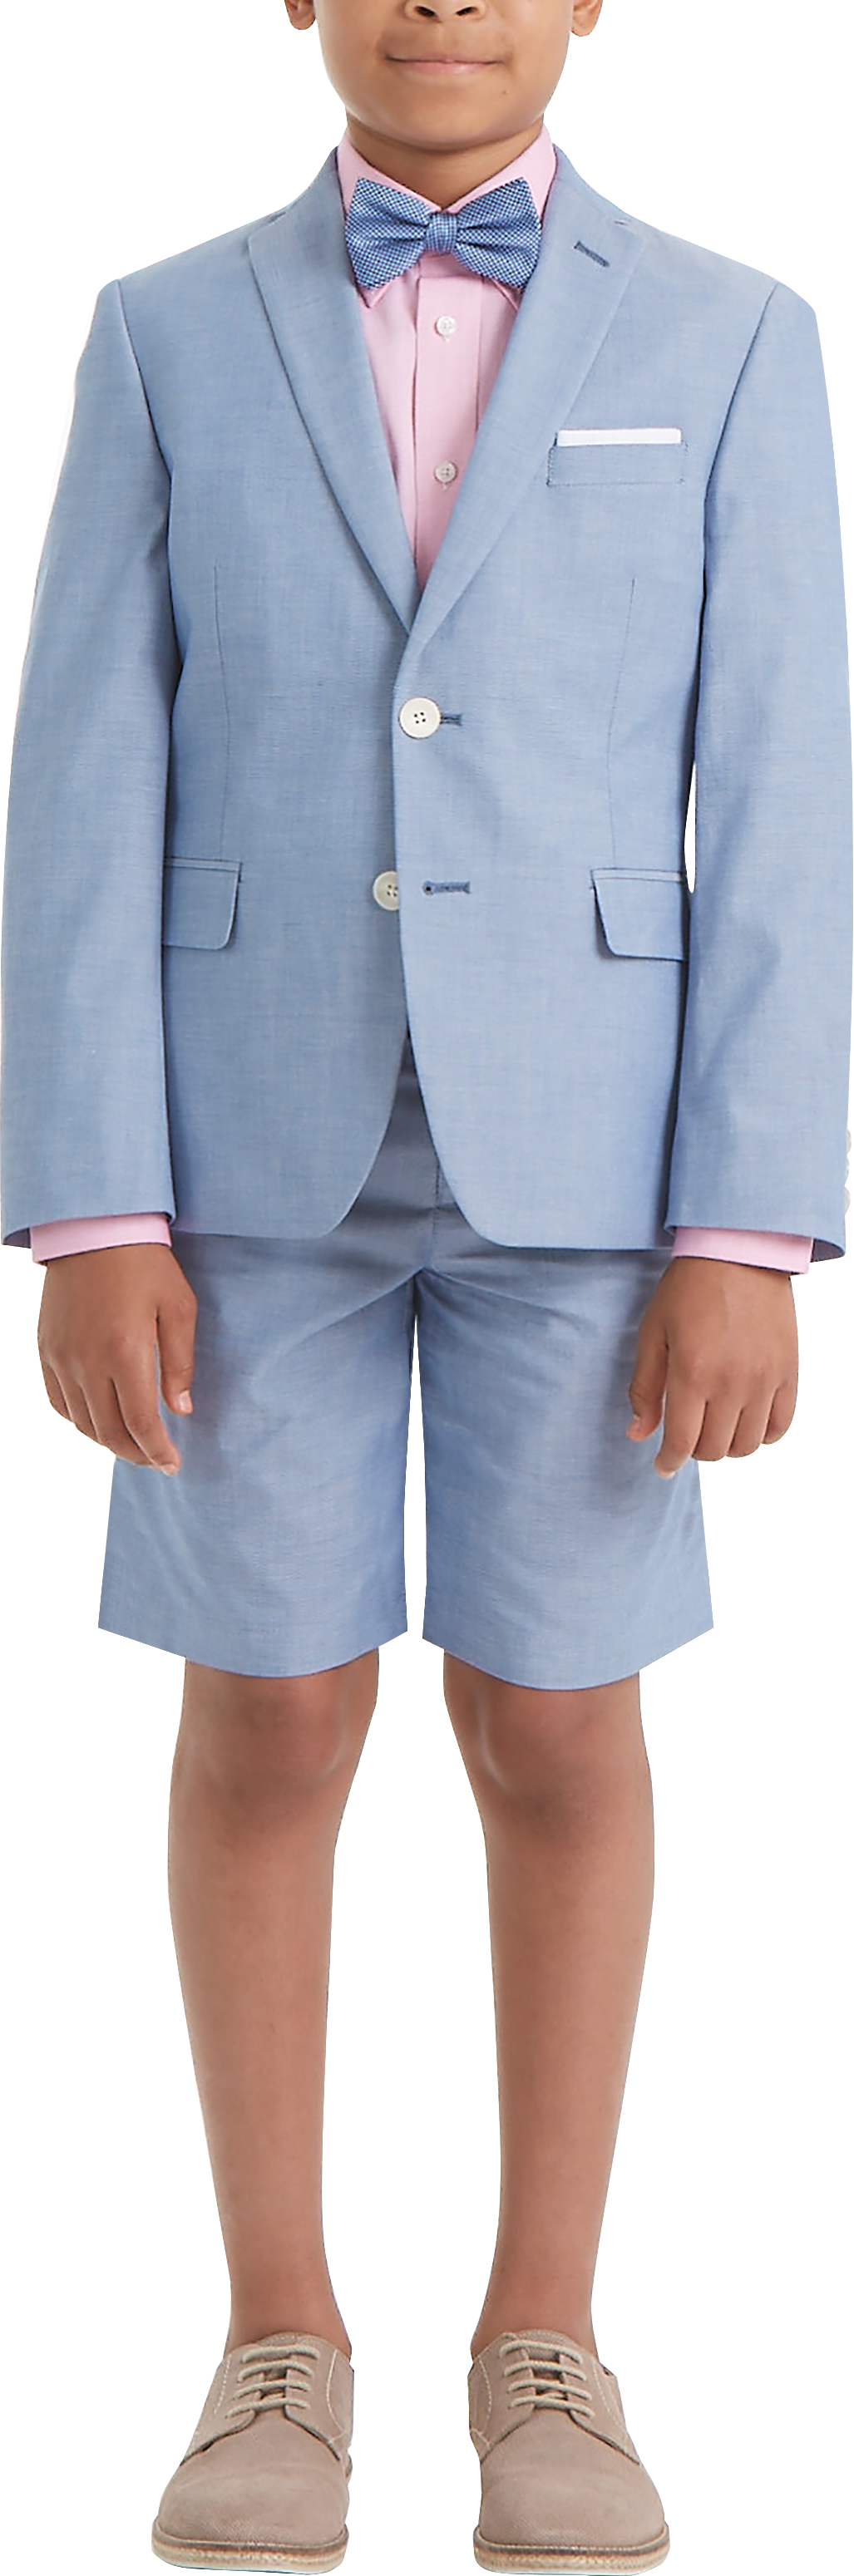 Boys (Sizes 8-20) Suit Separates Jacket